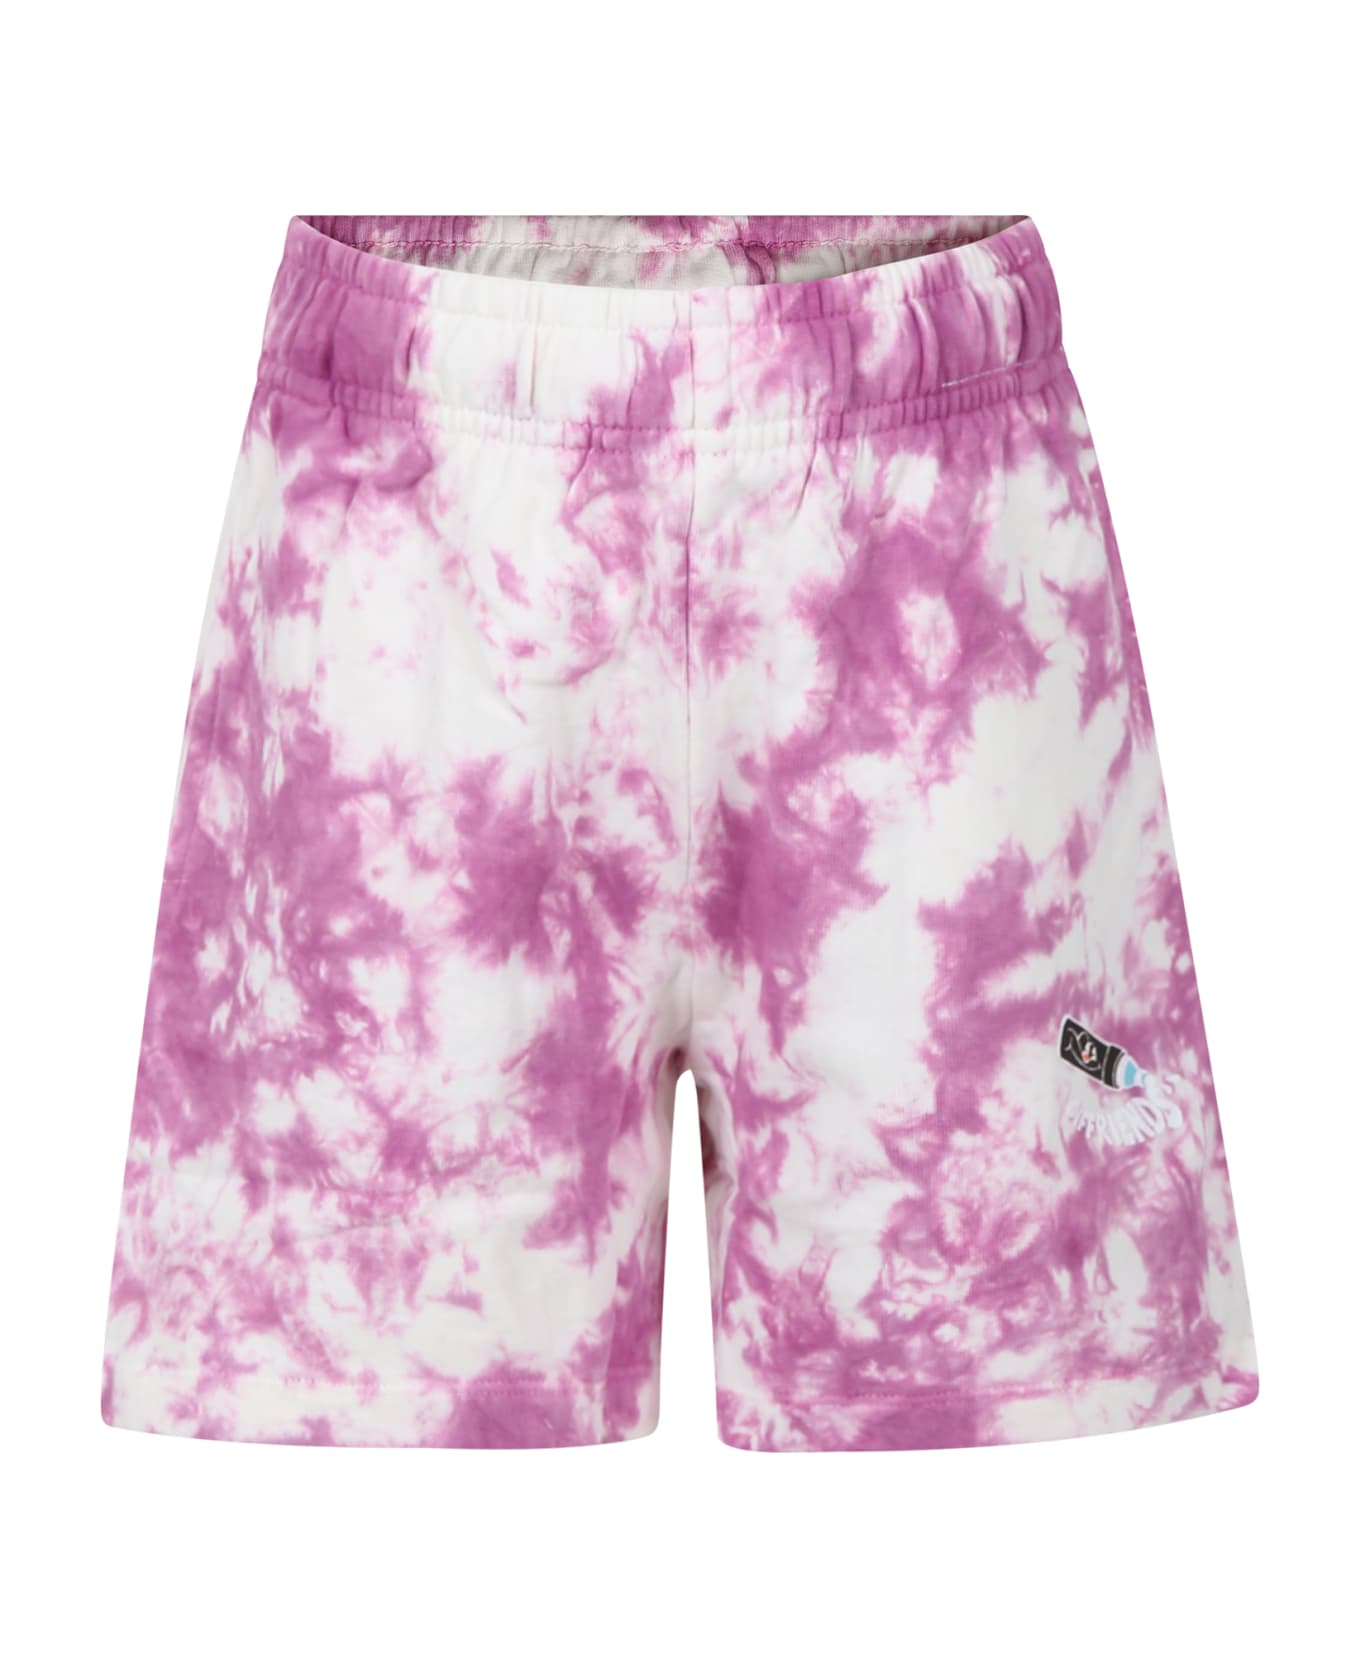 Molo Fuchsia Sports Shorts For Girl With Tie Dye - Fuchsia